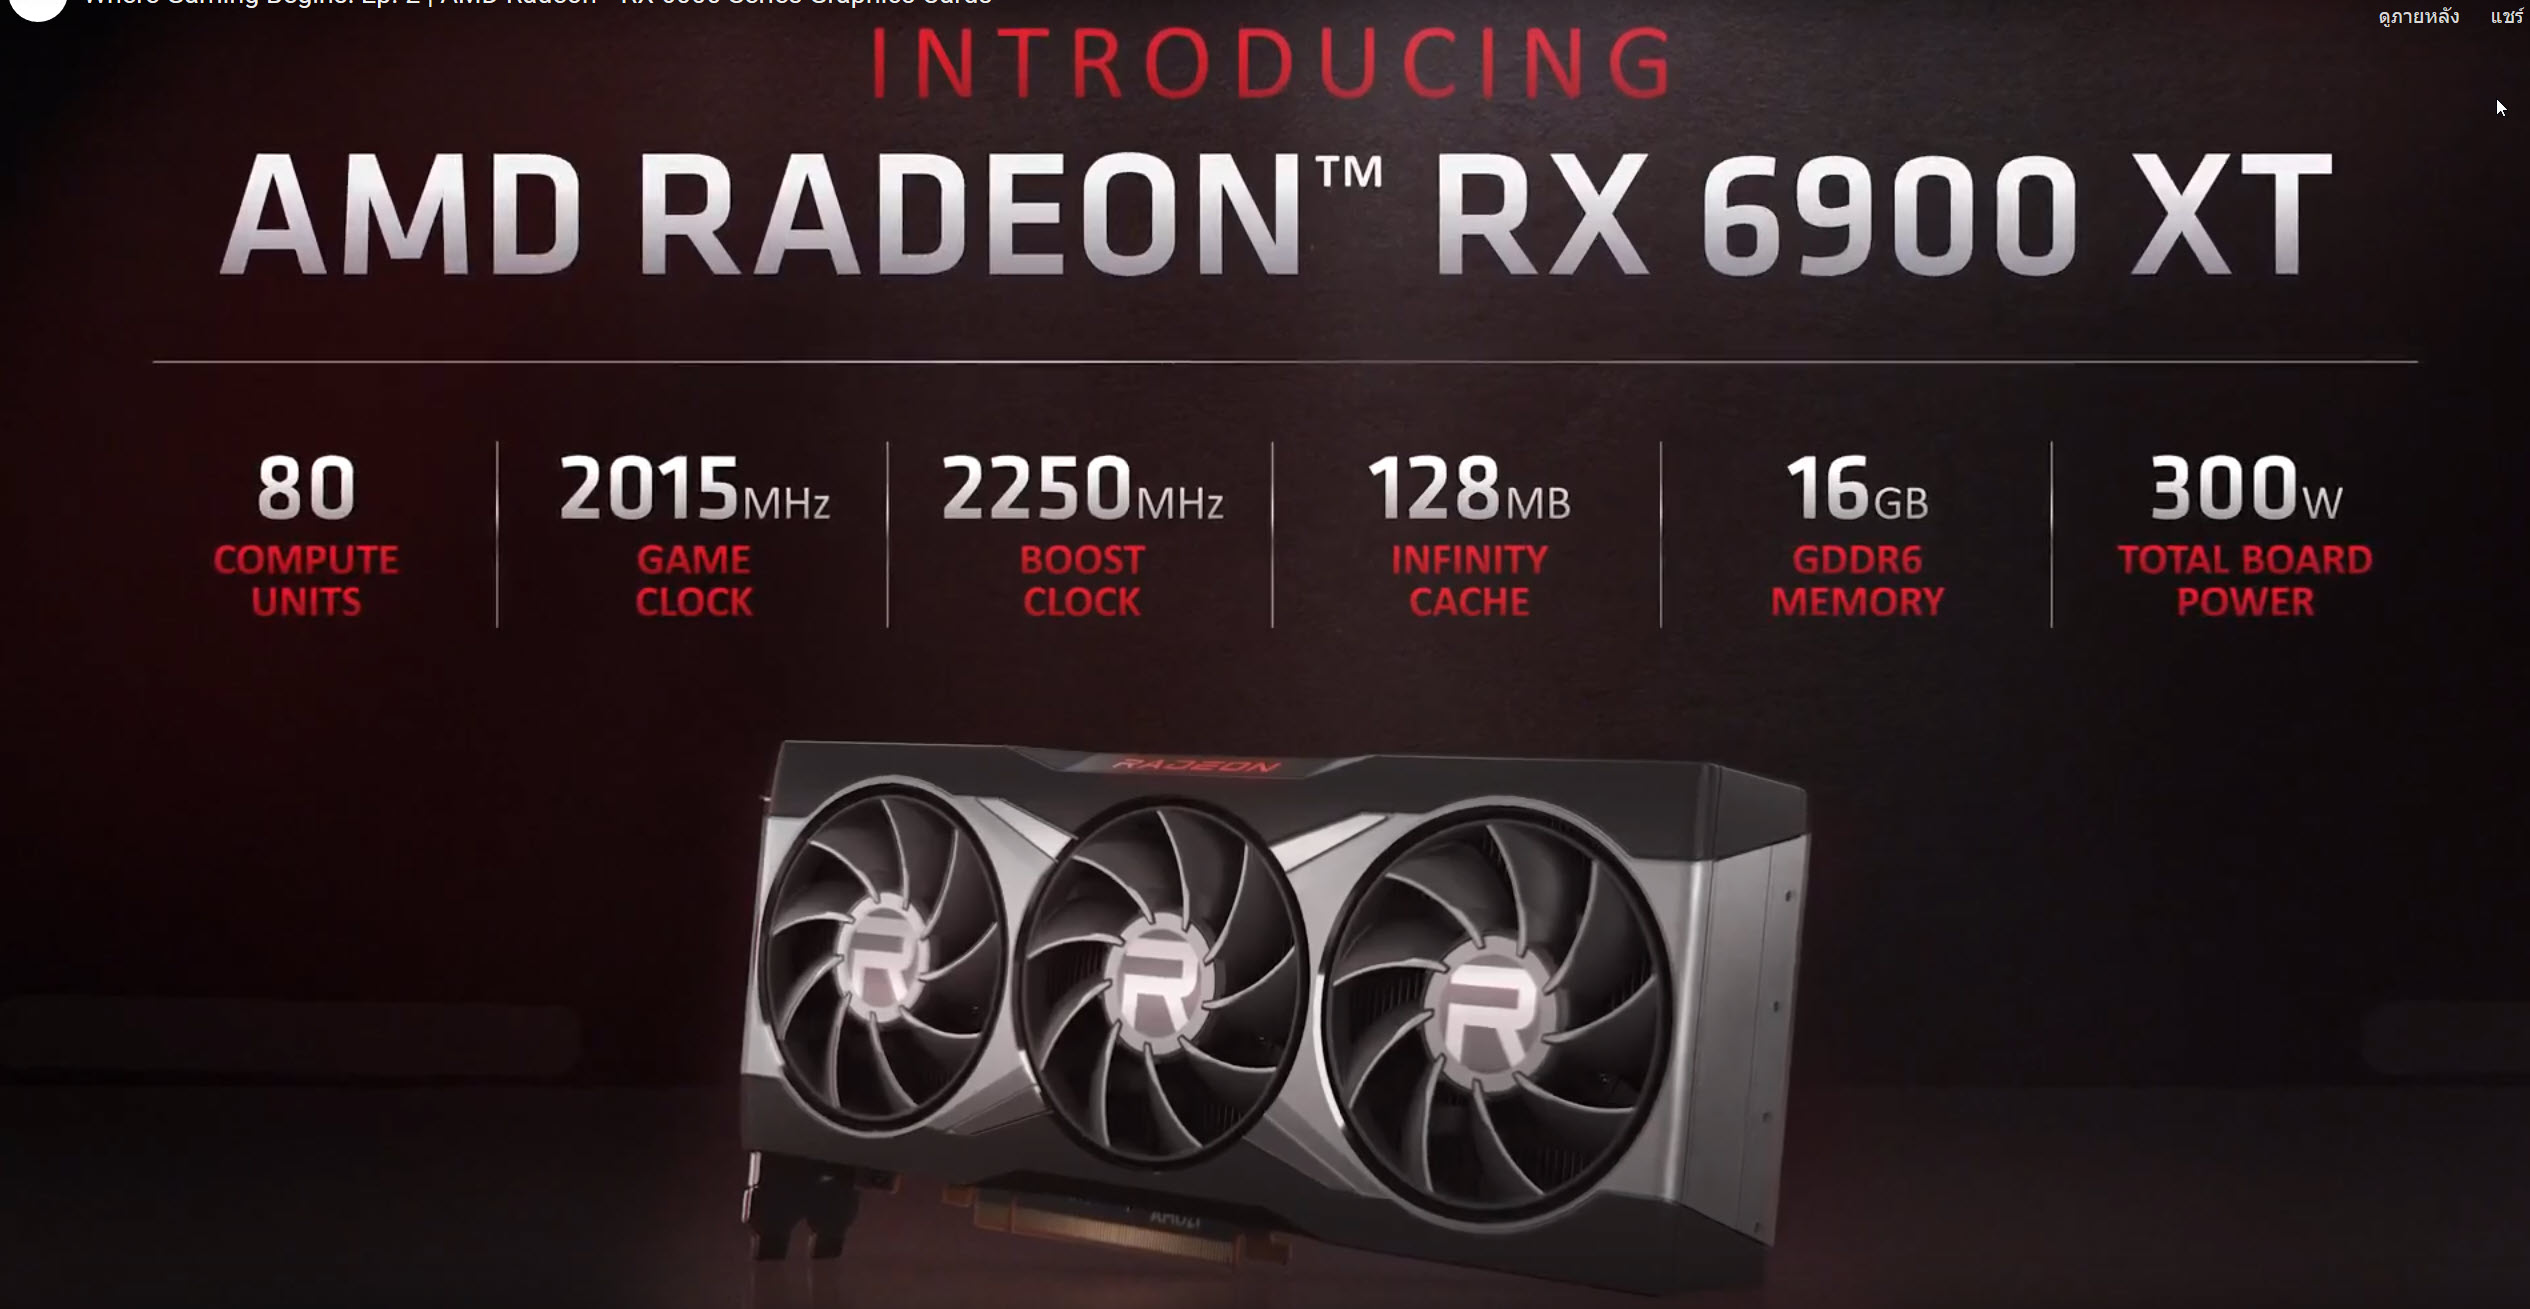 2020 10 28 23 24 28 AMD เปิดตัวการ์ดจอ AMD RADEON RX 6900XT , RX 6800XT และ RX 6800 หรือ Big Navi สถาปัตย์ RDNA2 อย่างเป็นทางการ 